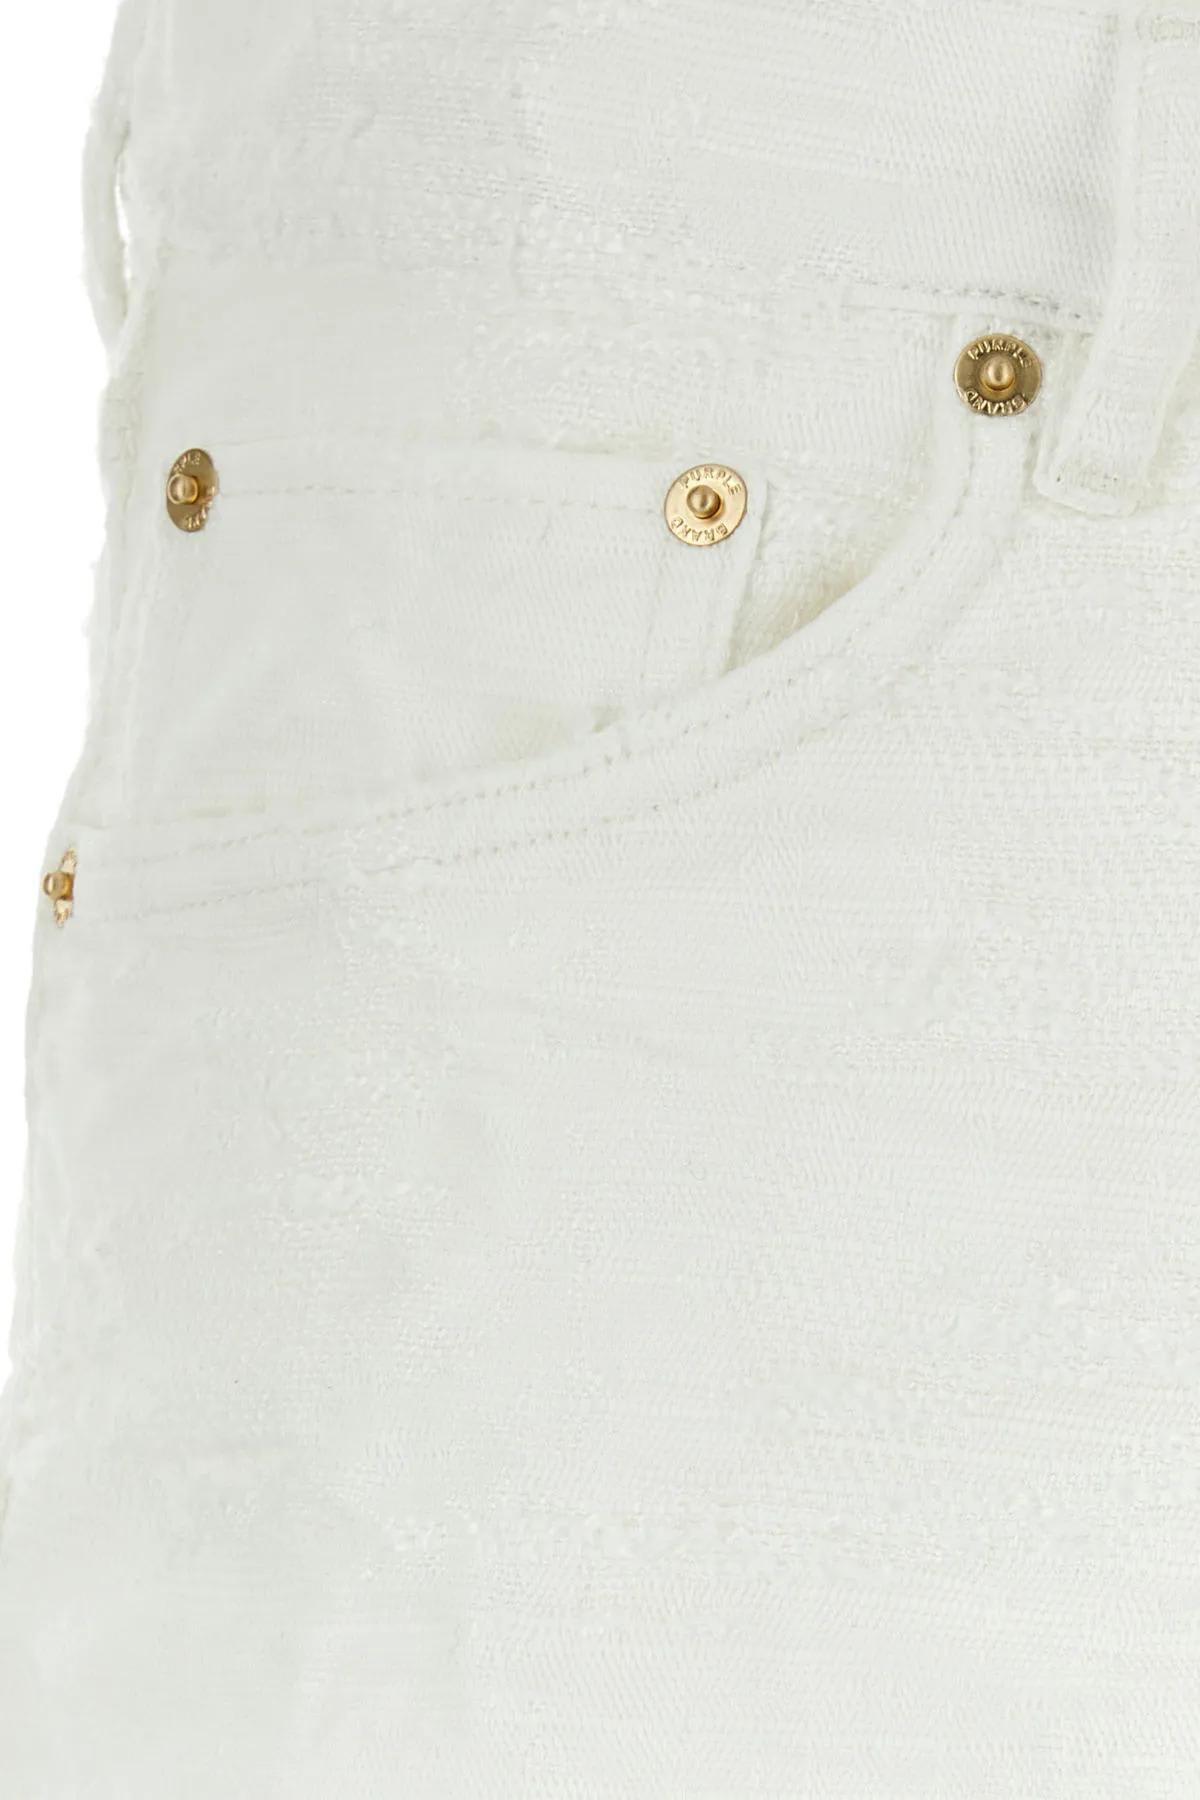 Shop Purple Brand White Denim Jeans